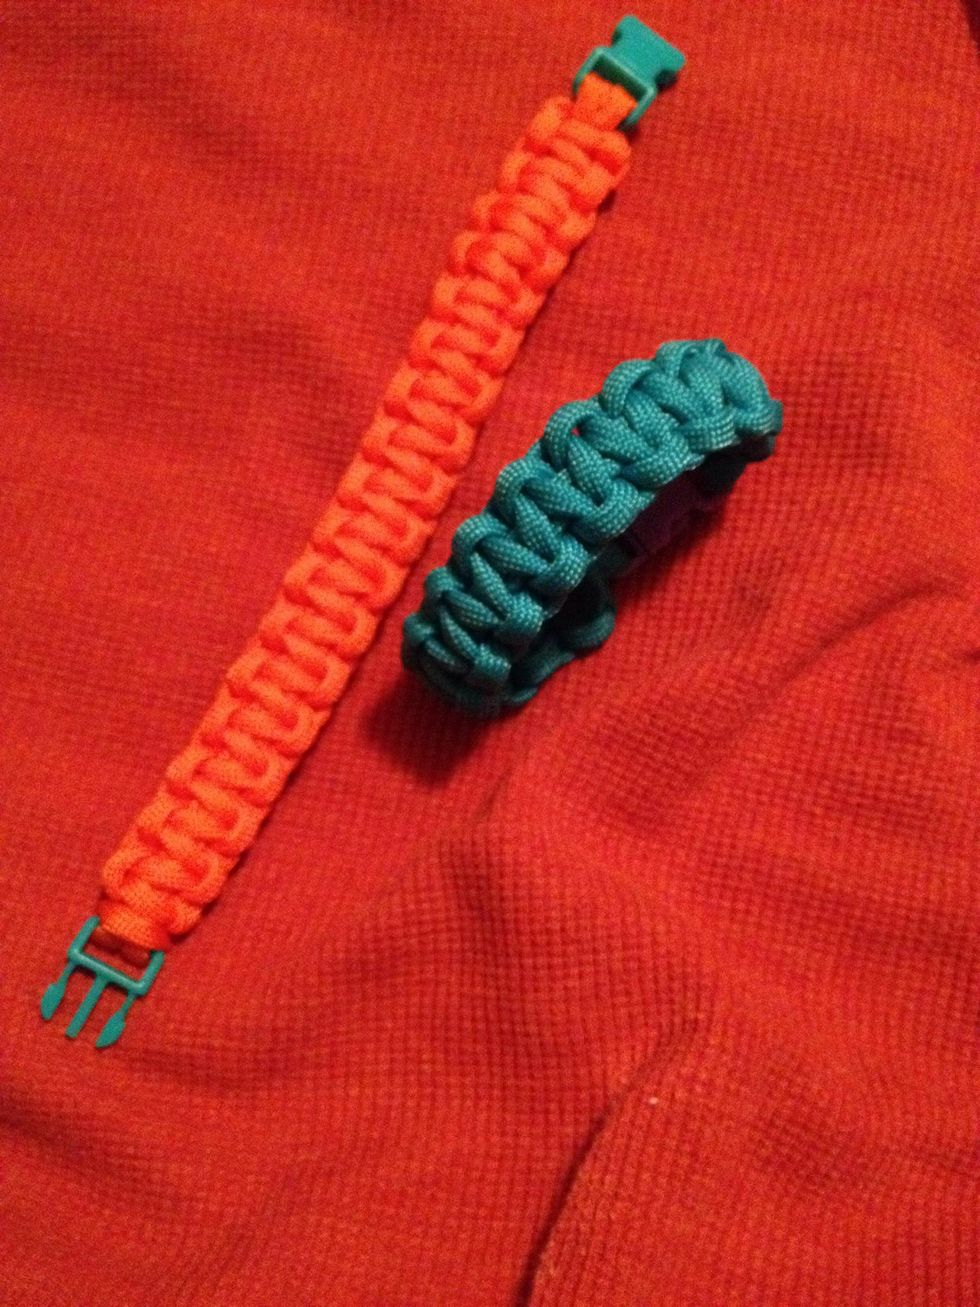 How to make a parachute cord bracelet - B+C Guides